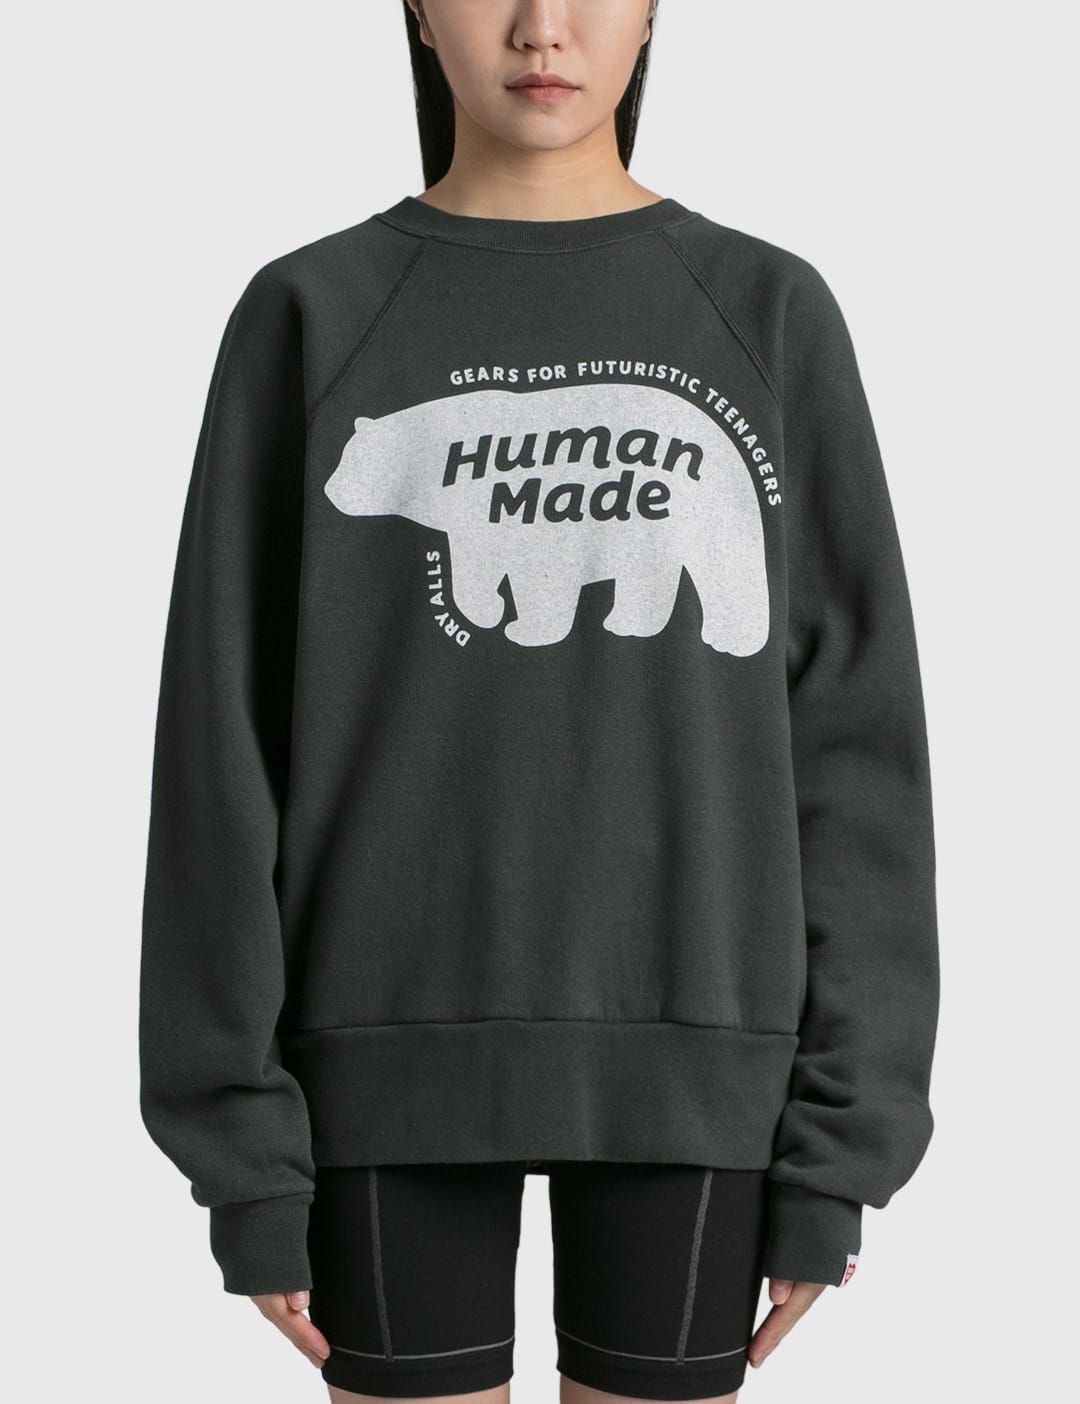 Human Made Raglan Crewneck Sweatshirt In Black   ModeSens